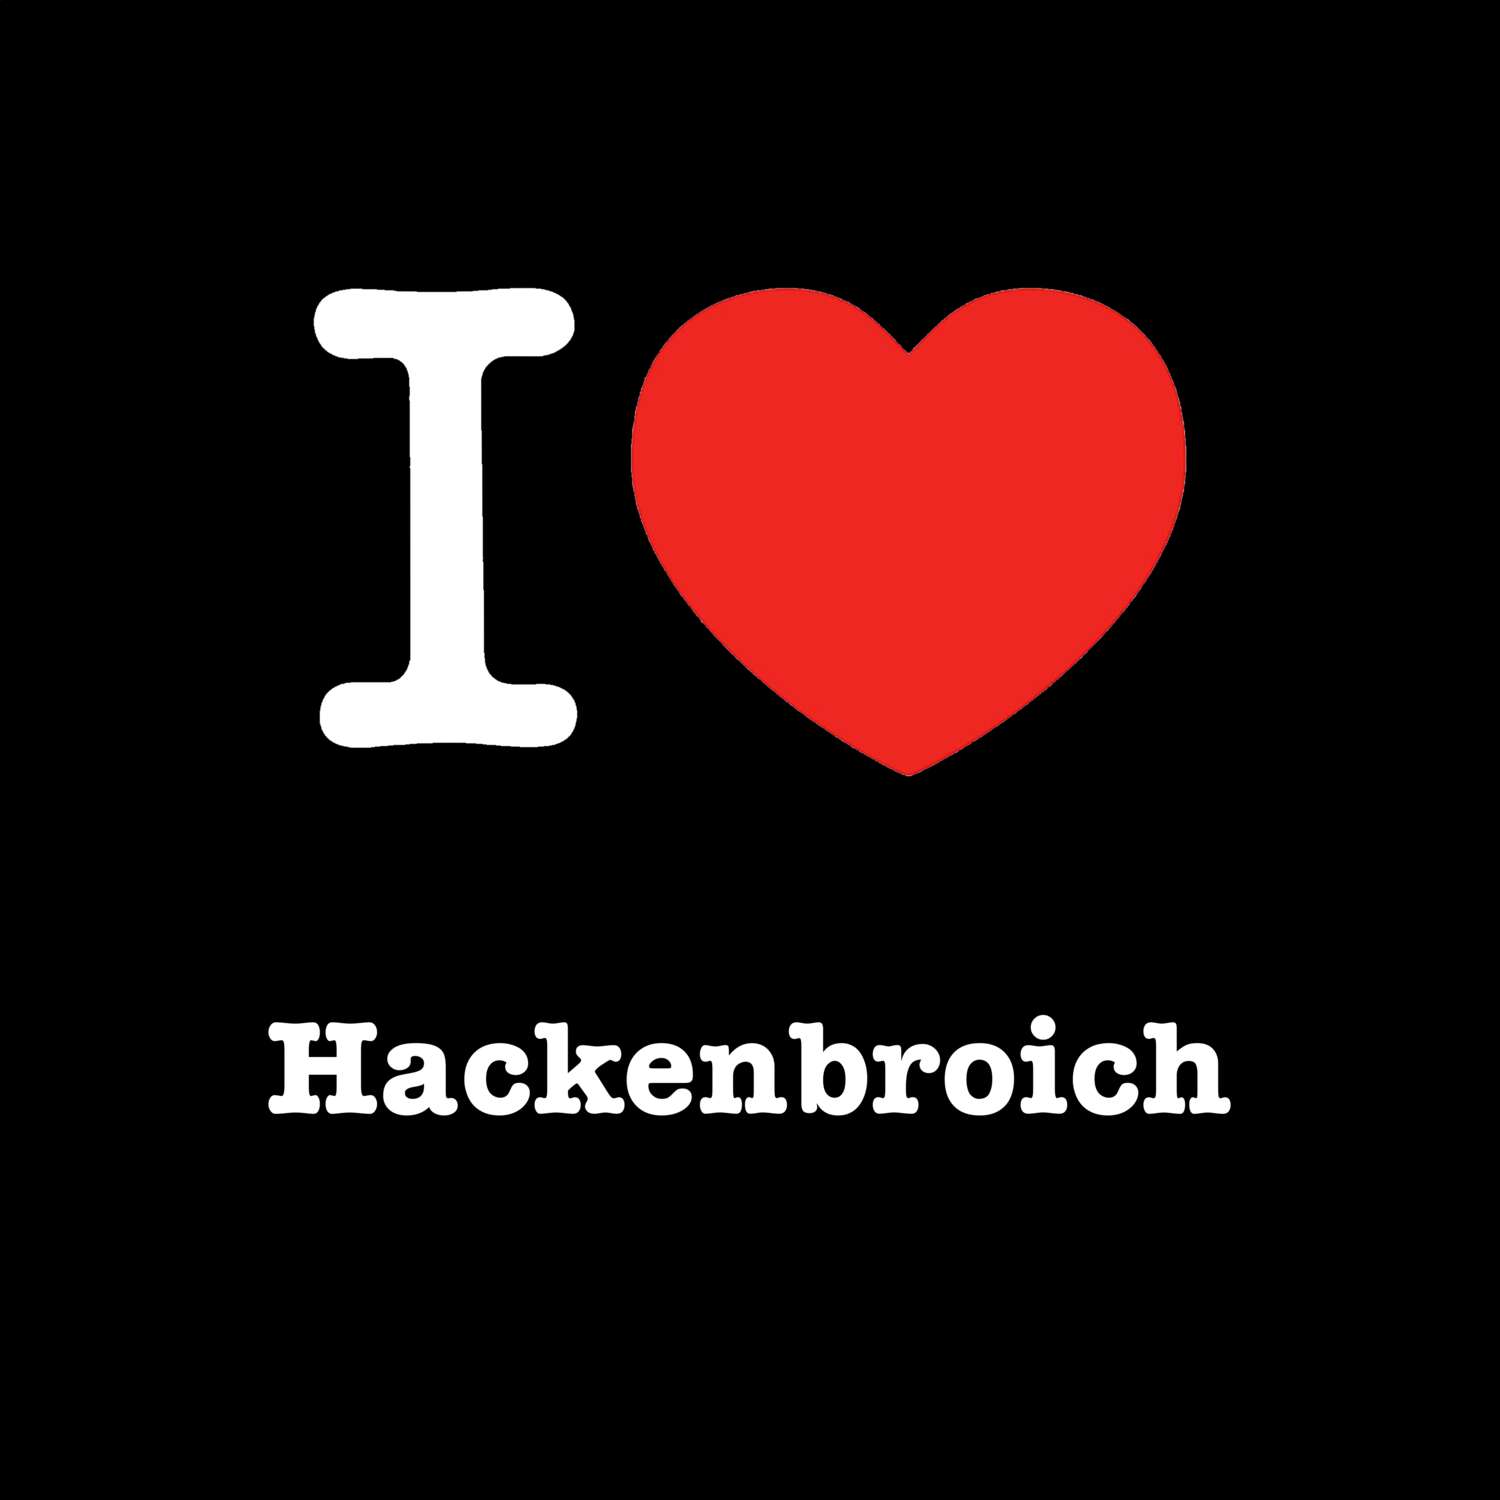 Hackenbroich T-Shirt »I love«